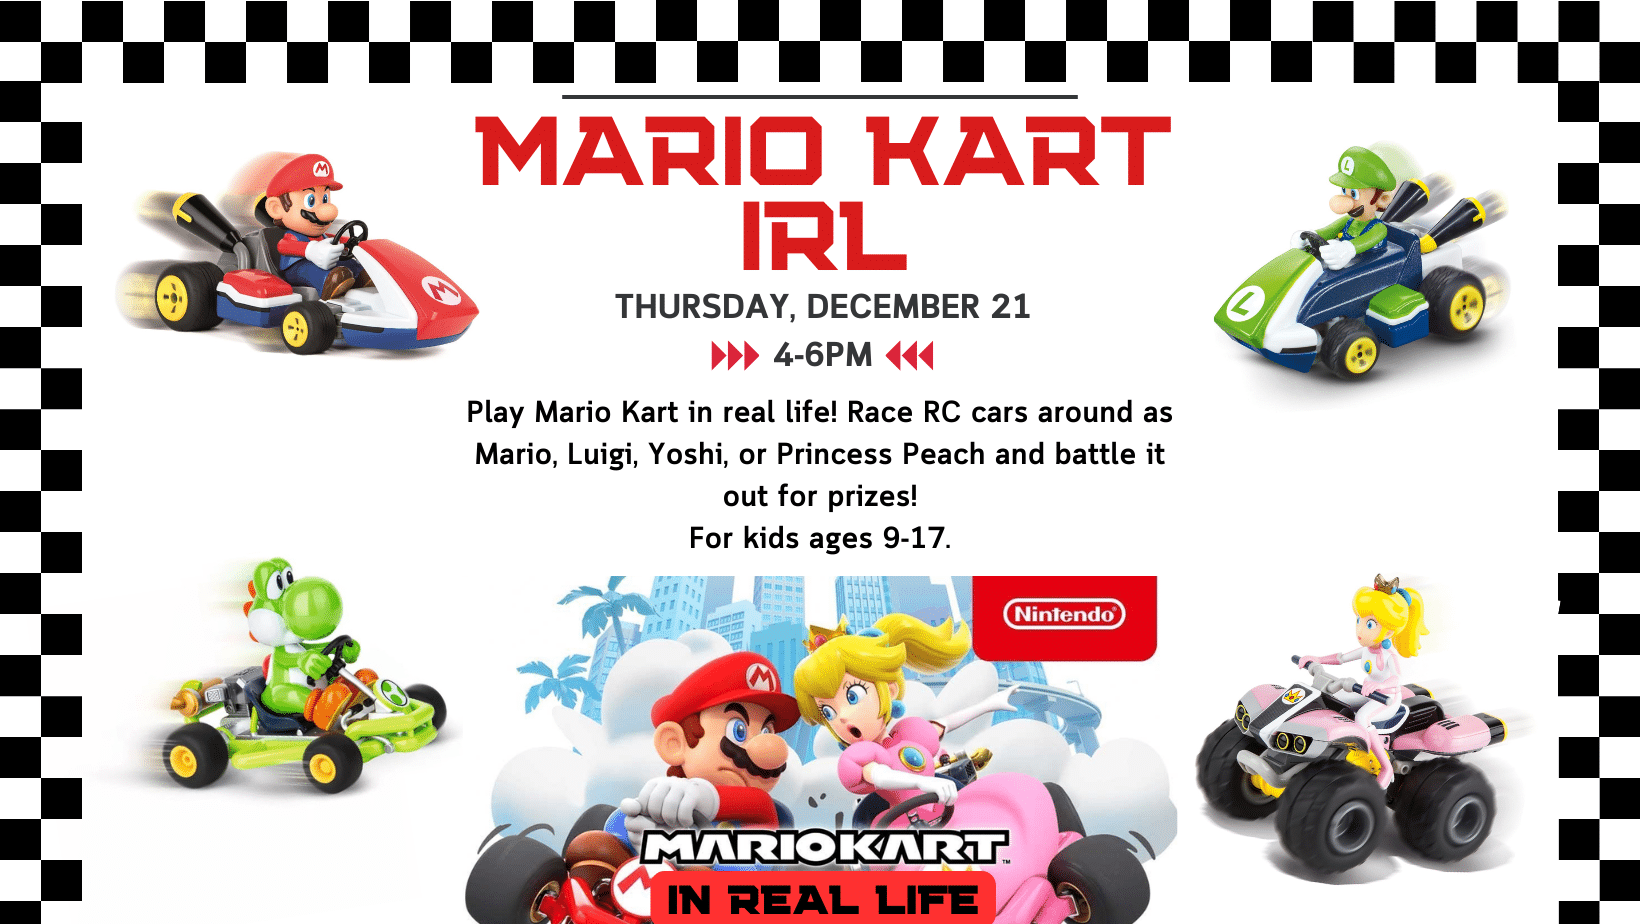 Mario Kart IRL, Thursday, December 21 at 4:00 pm